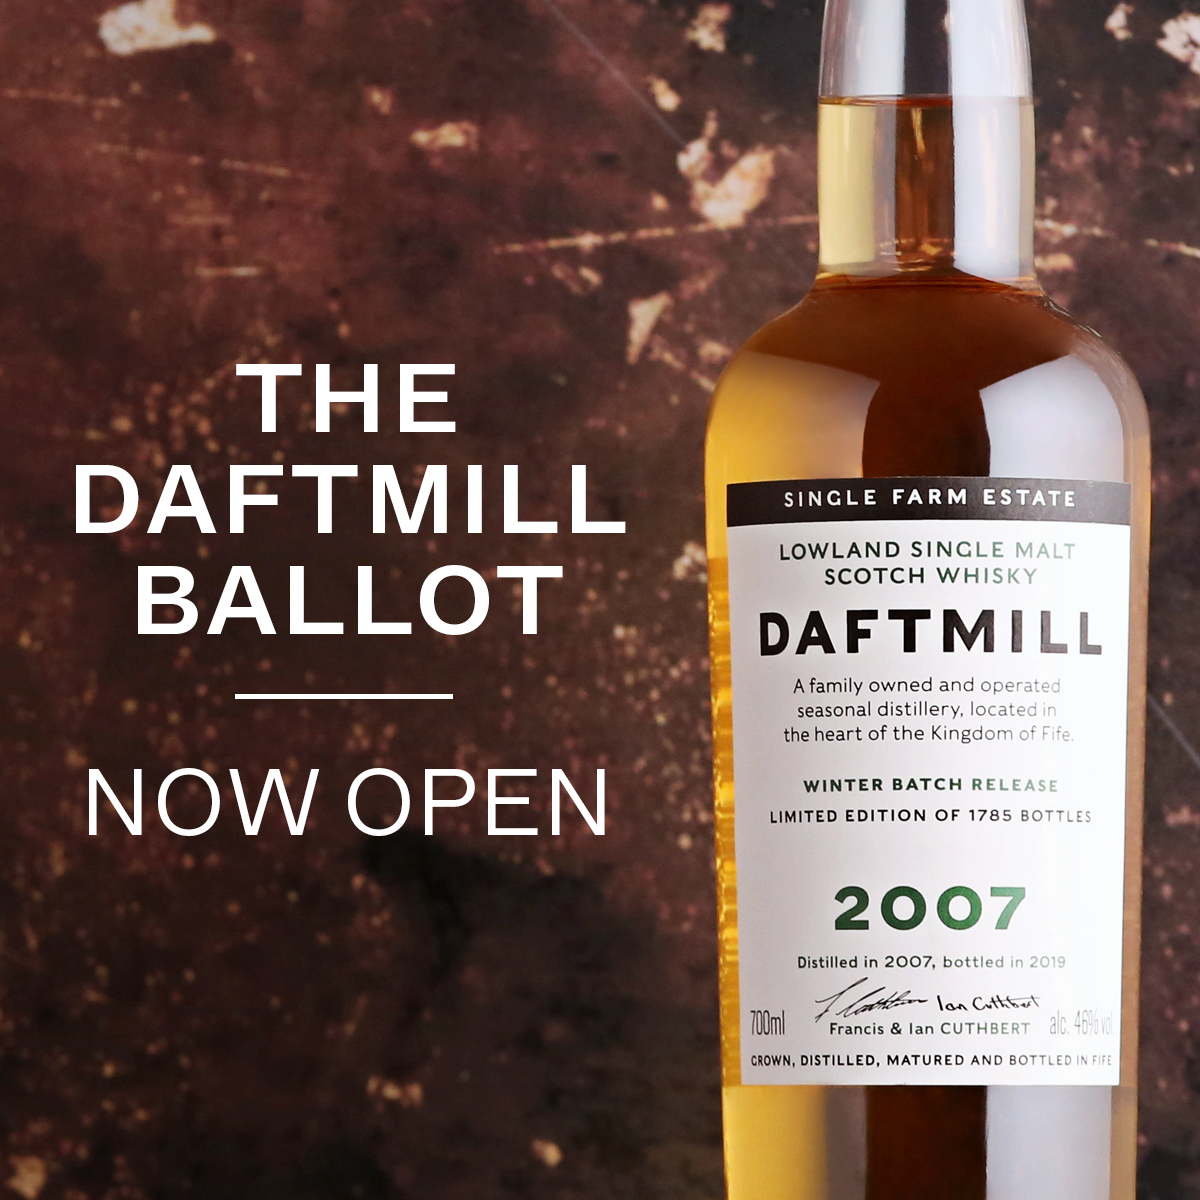 Berry Bros. & Rudd - The Daftmill Ballot is now open